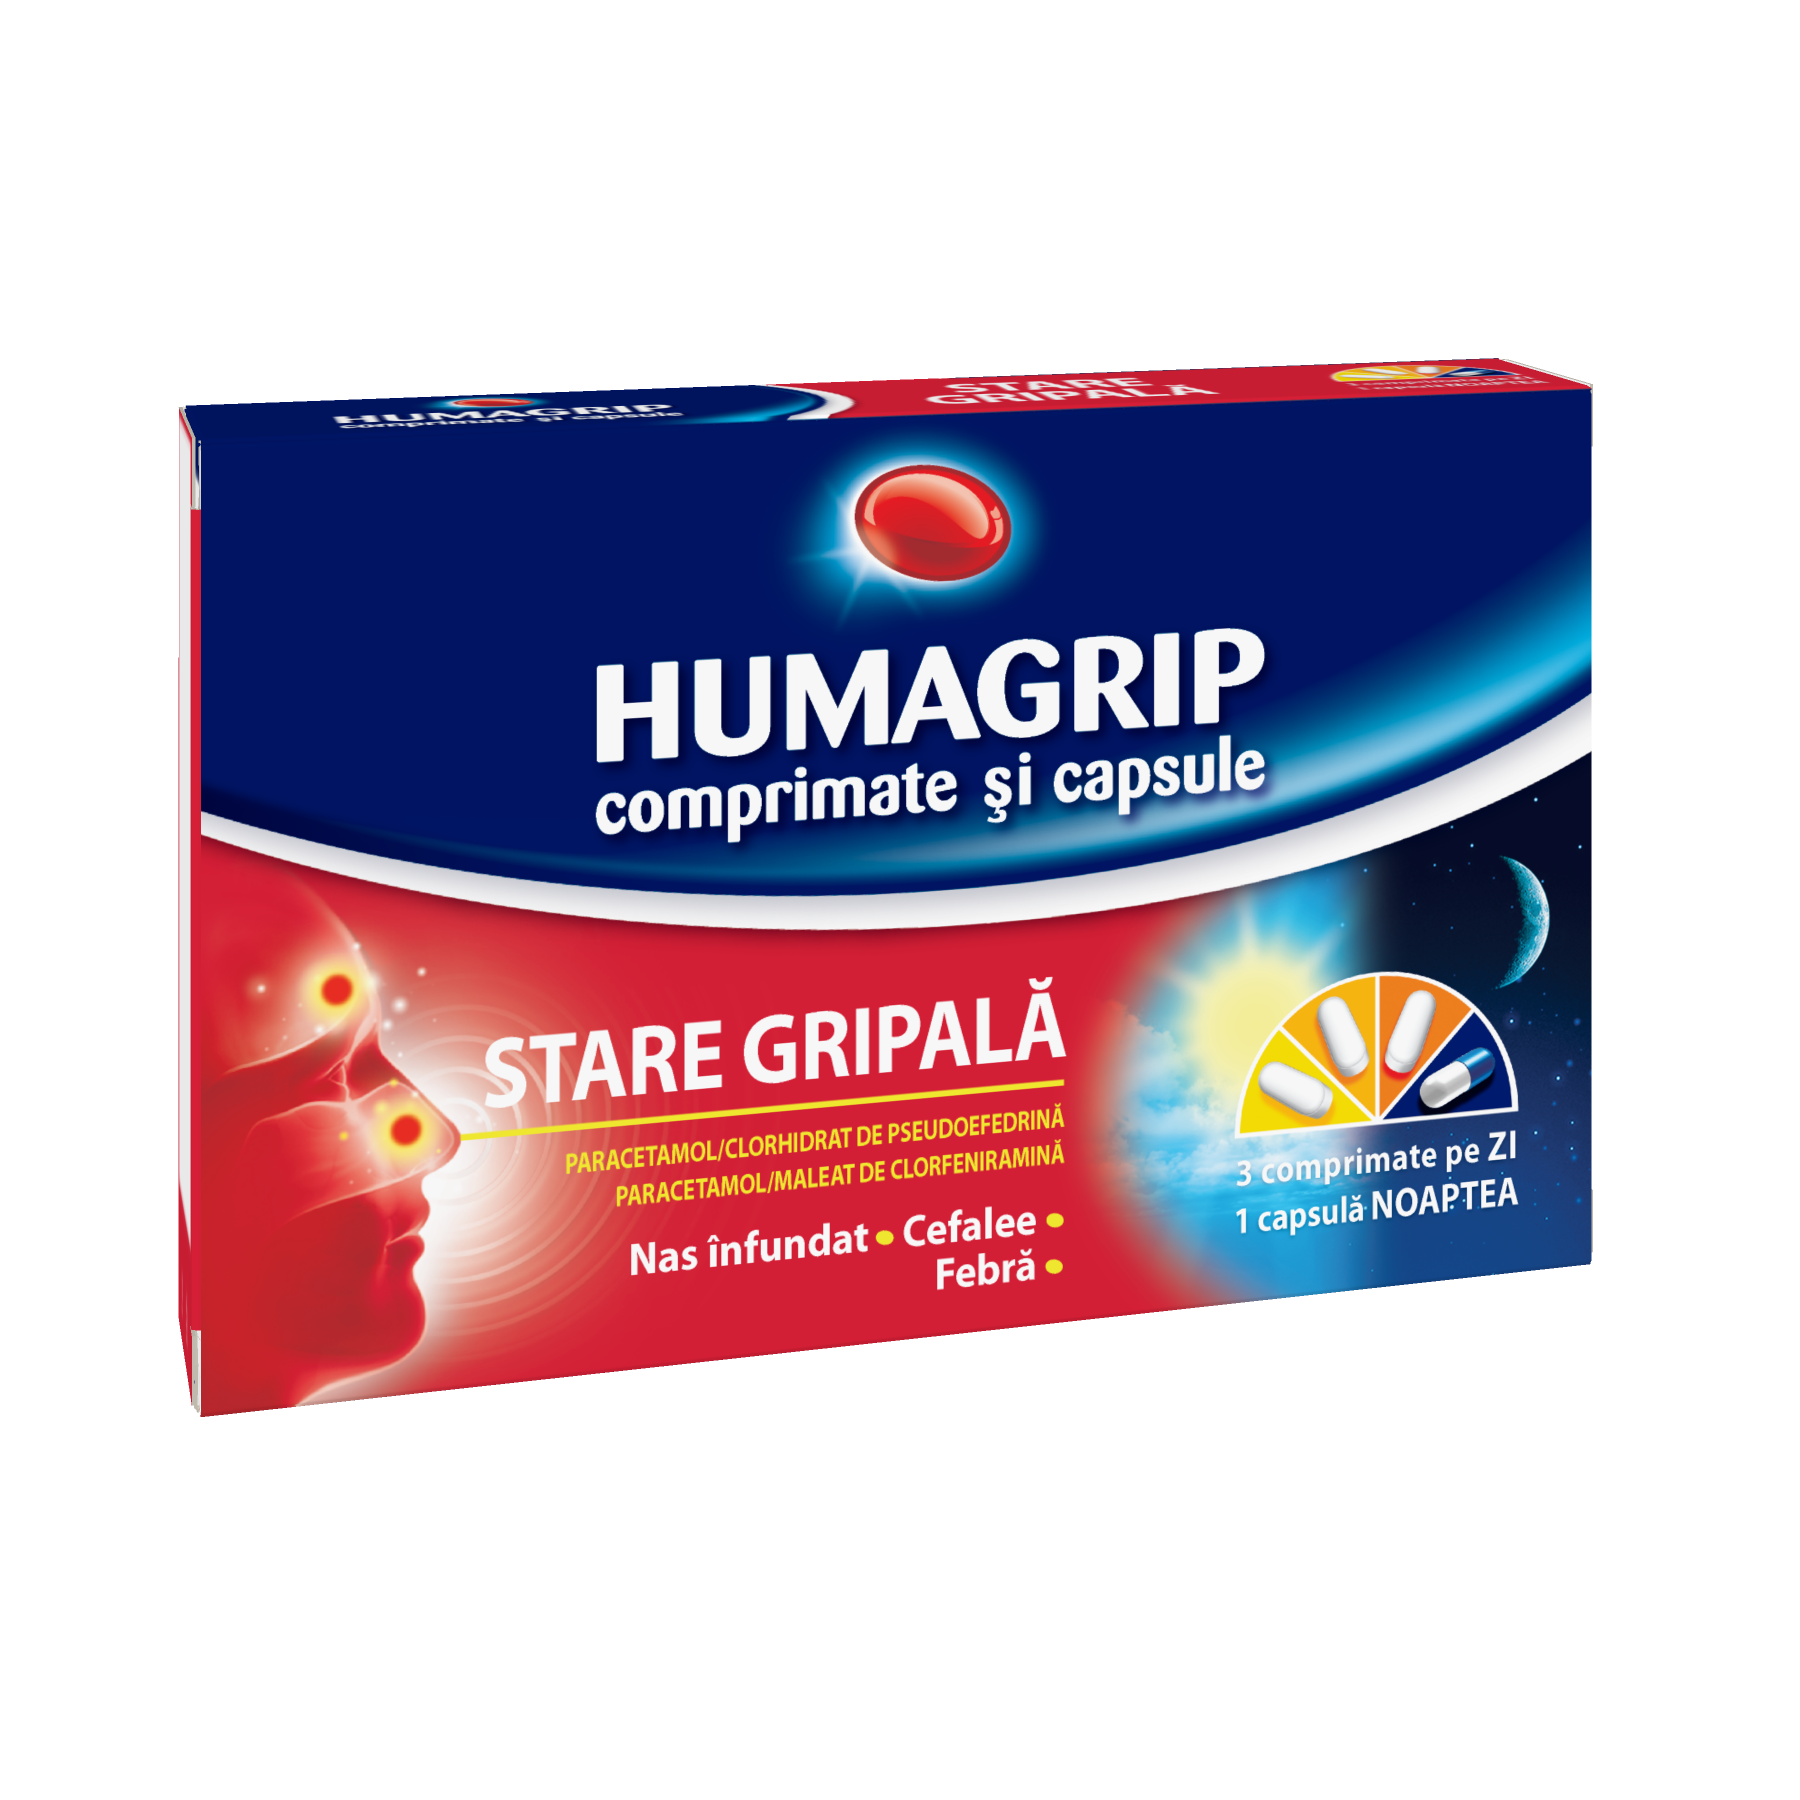 Raceala si gripa - Humagrip, 12 Comprimate si 4 Capsule, Urgo, farmacieieftina.ro